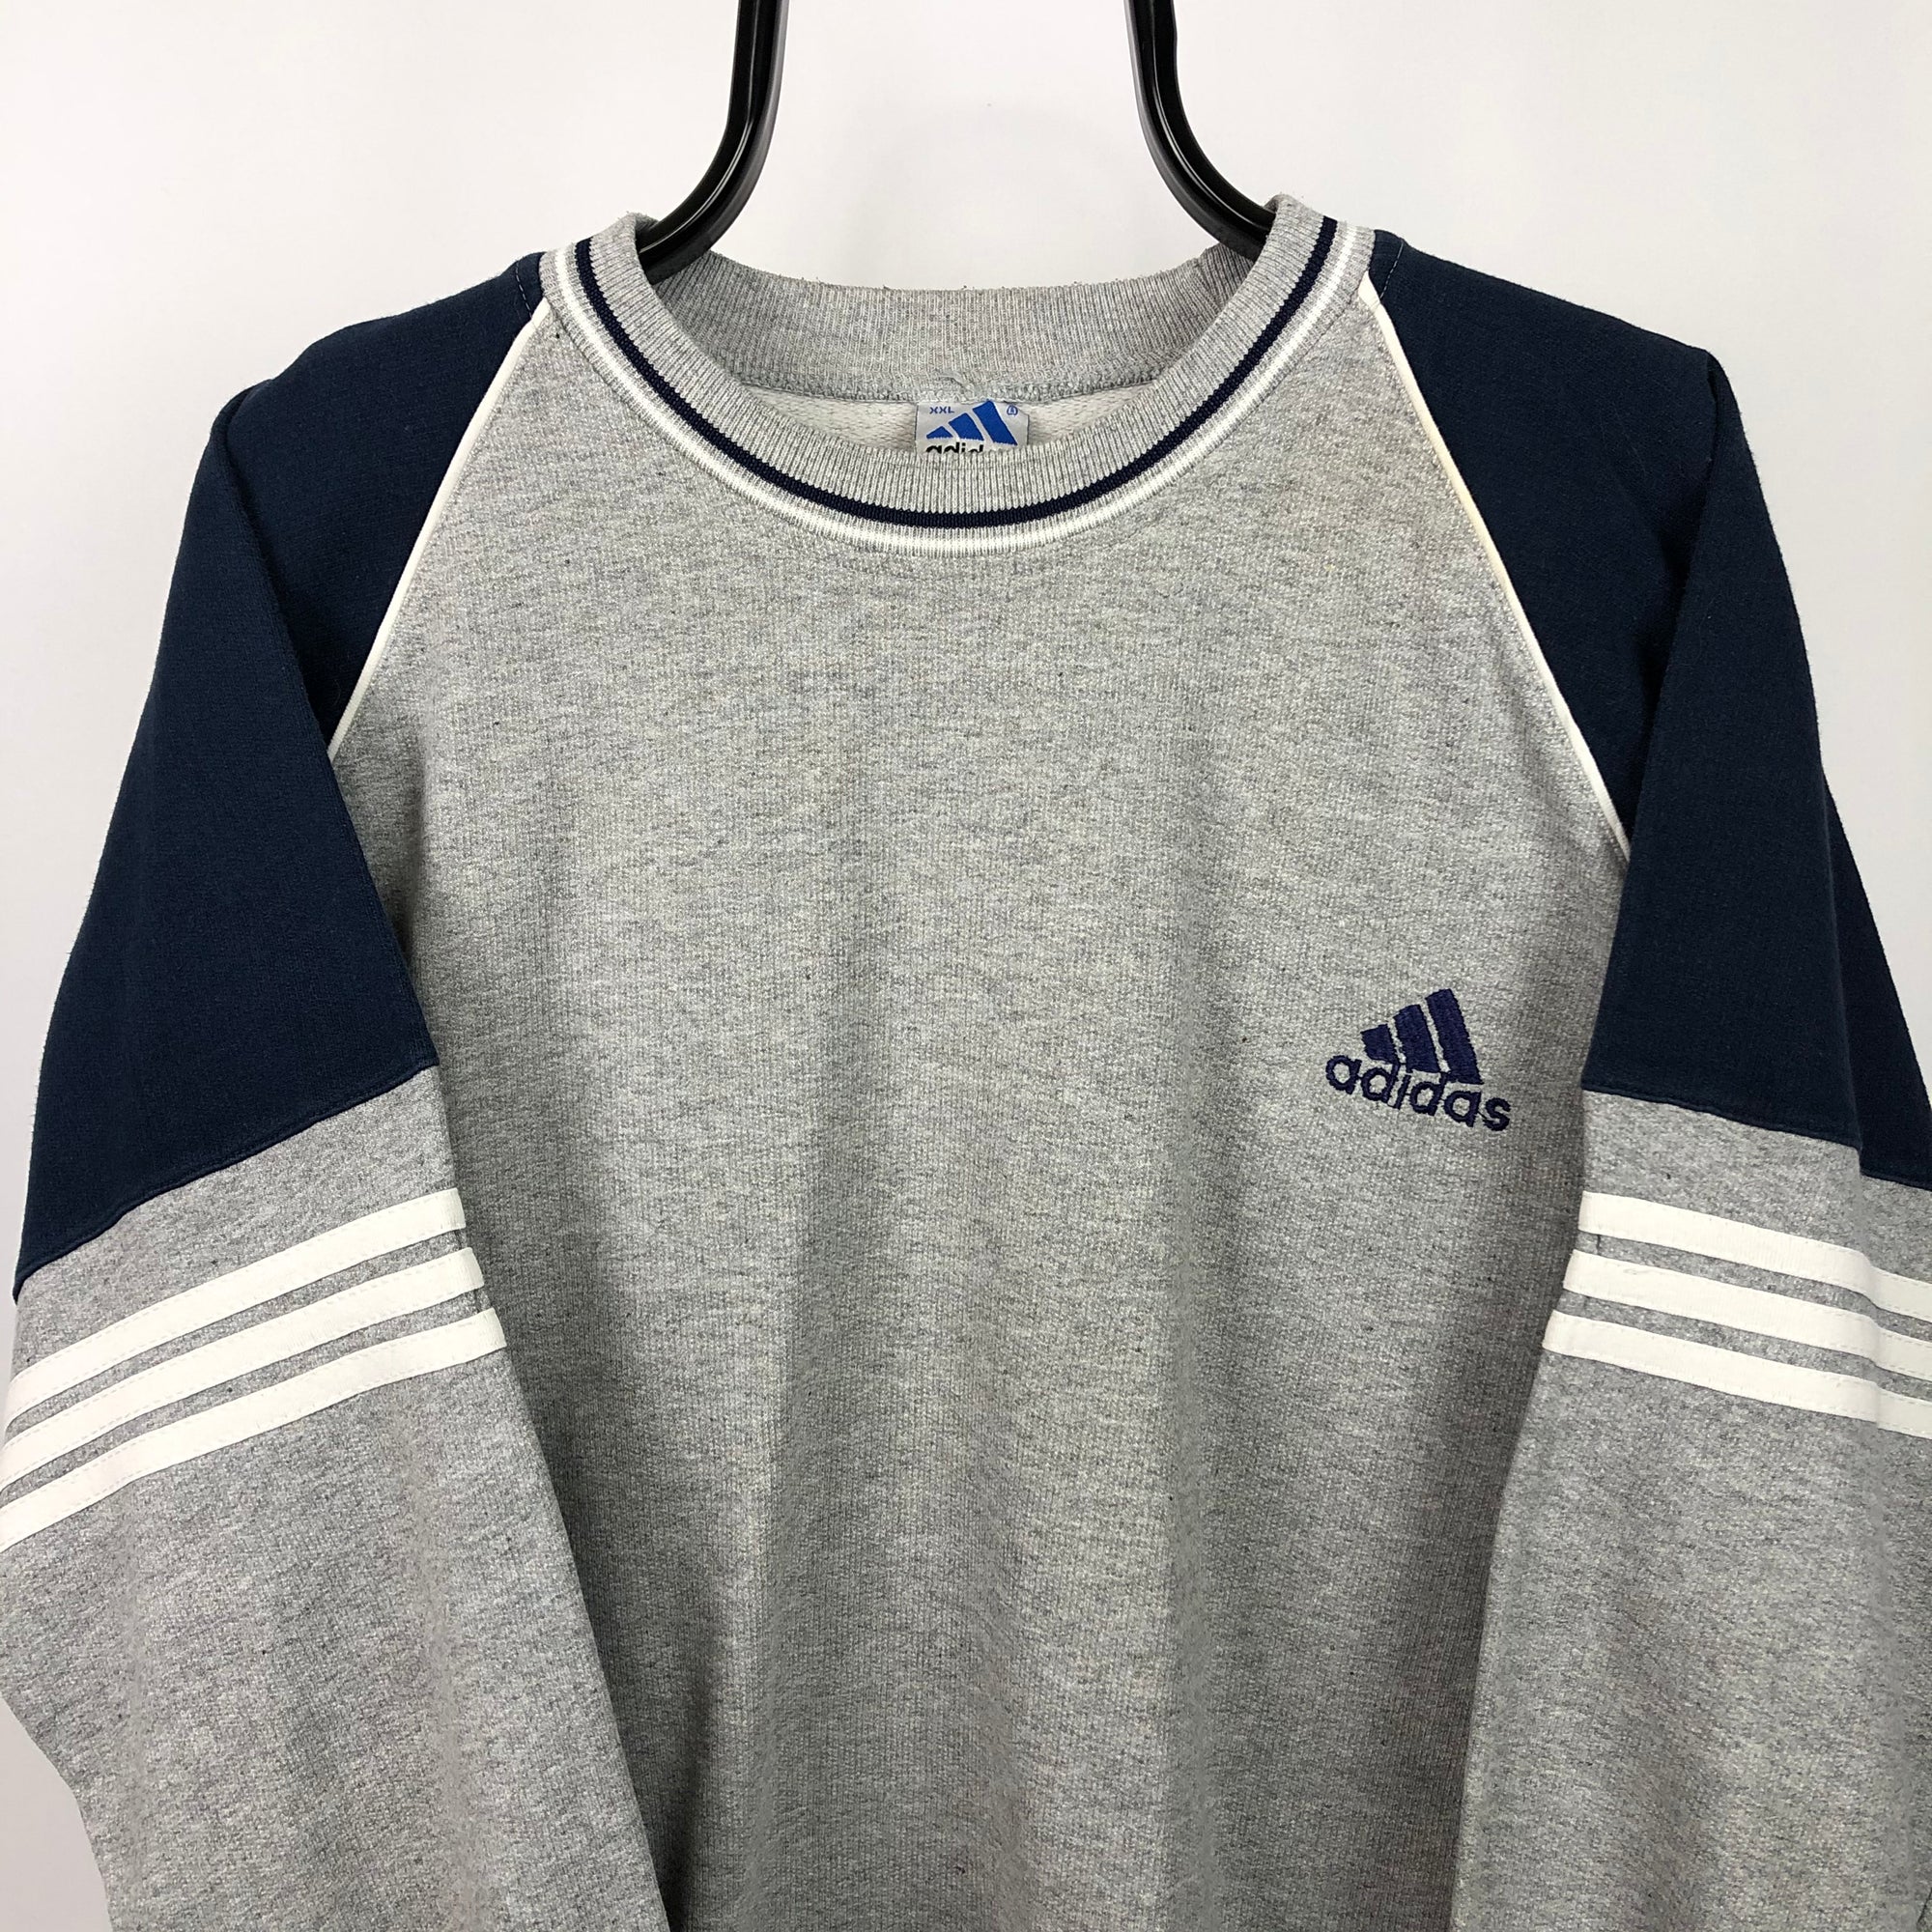 Vintage 90s Adidas Embroidered Small Logo Sweatshirt - Men's Large/Women's XL